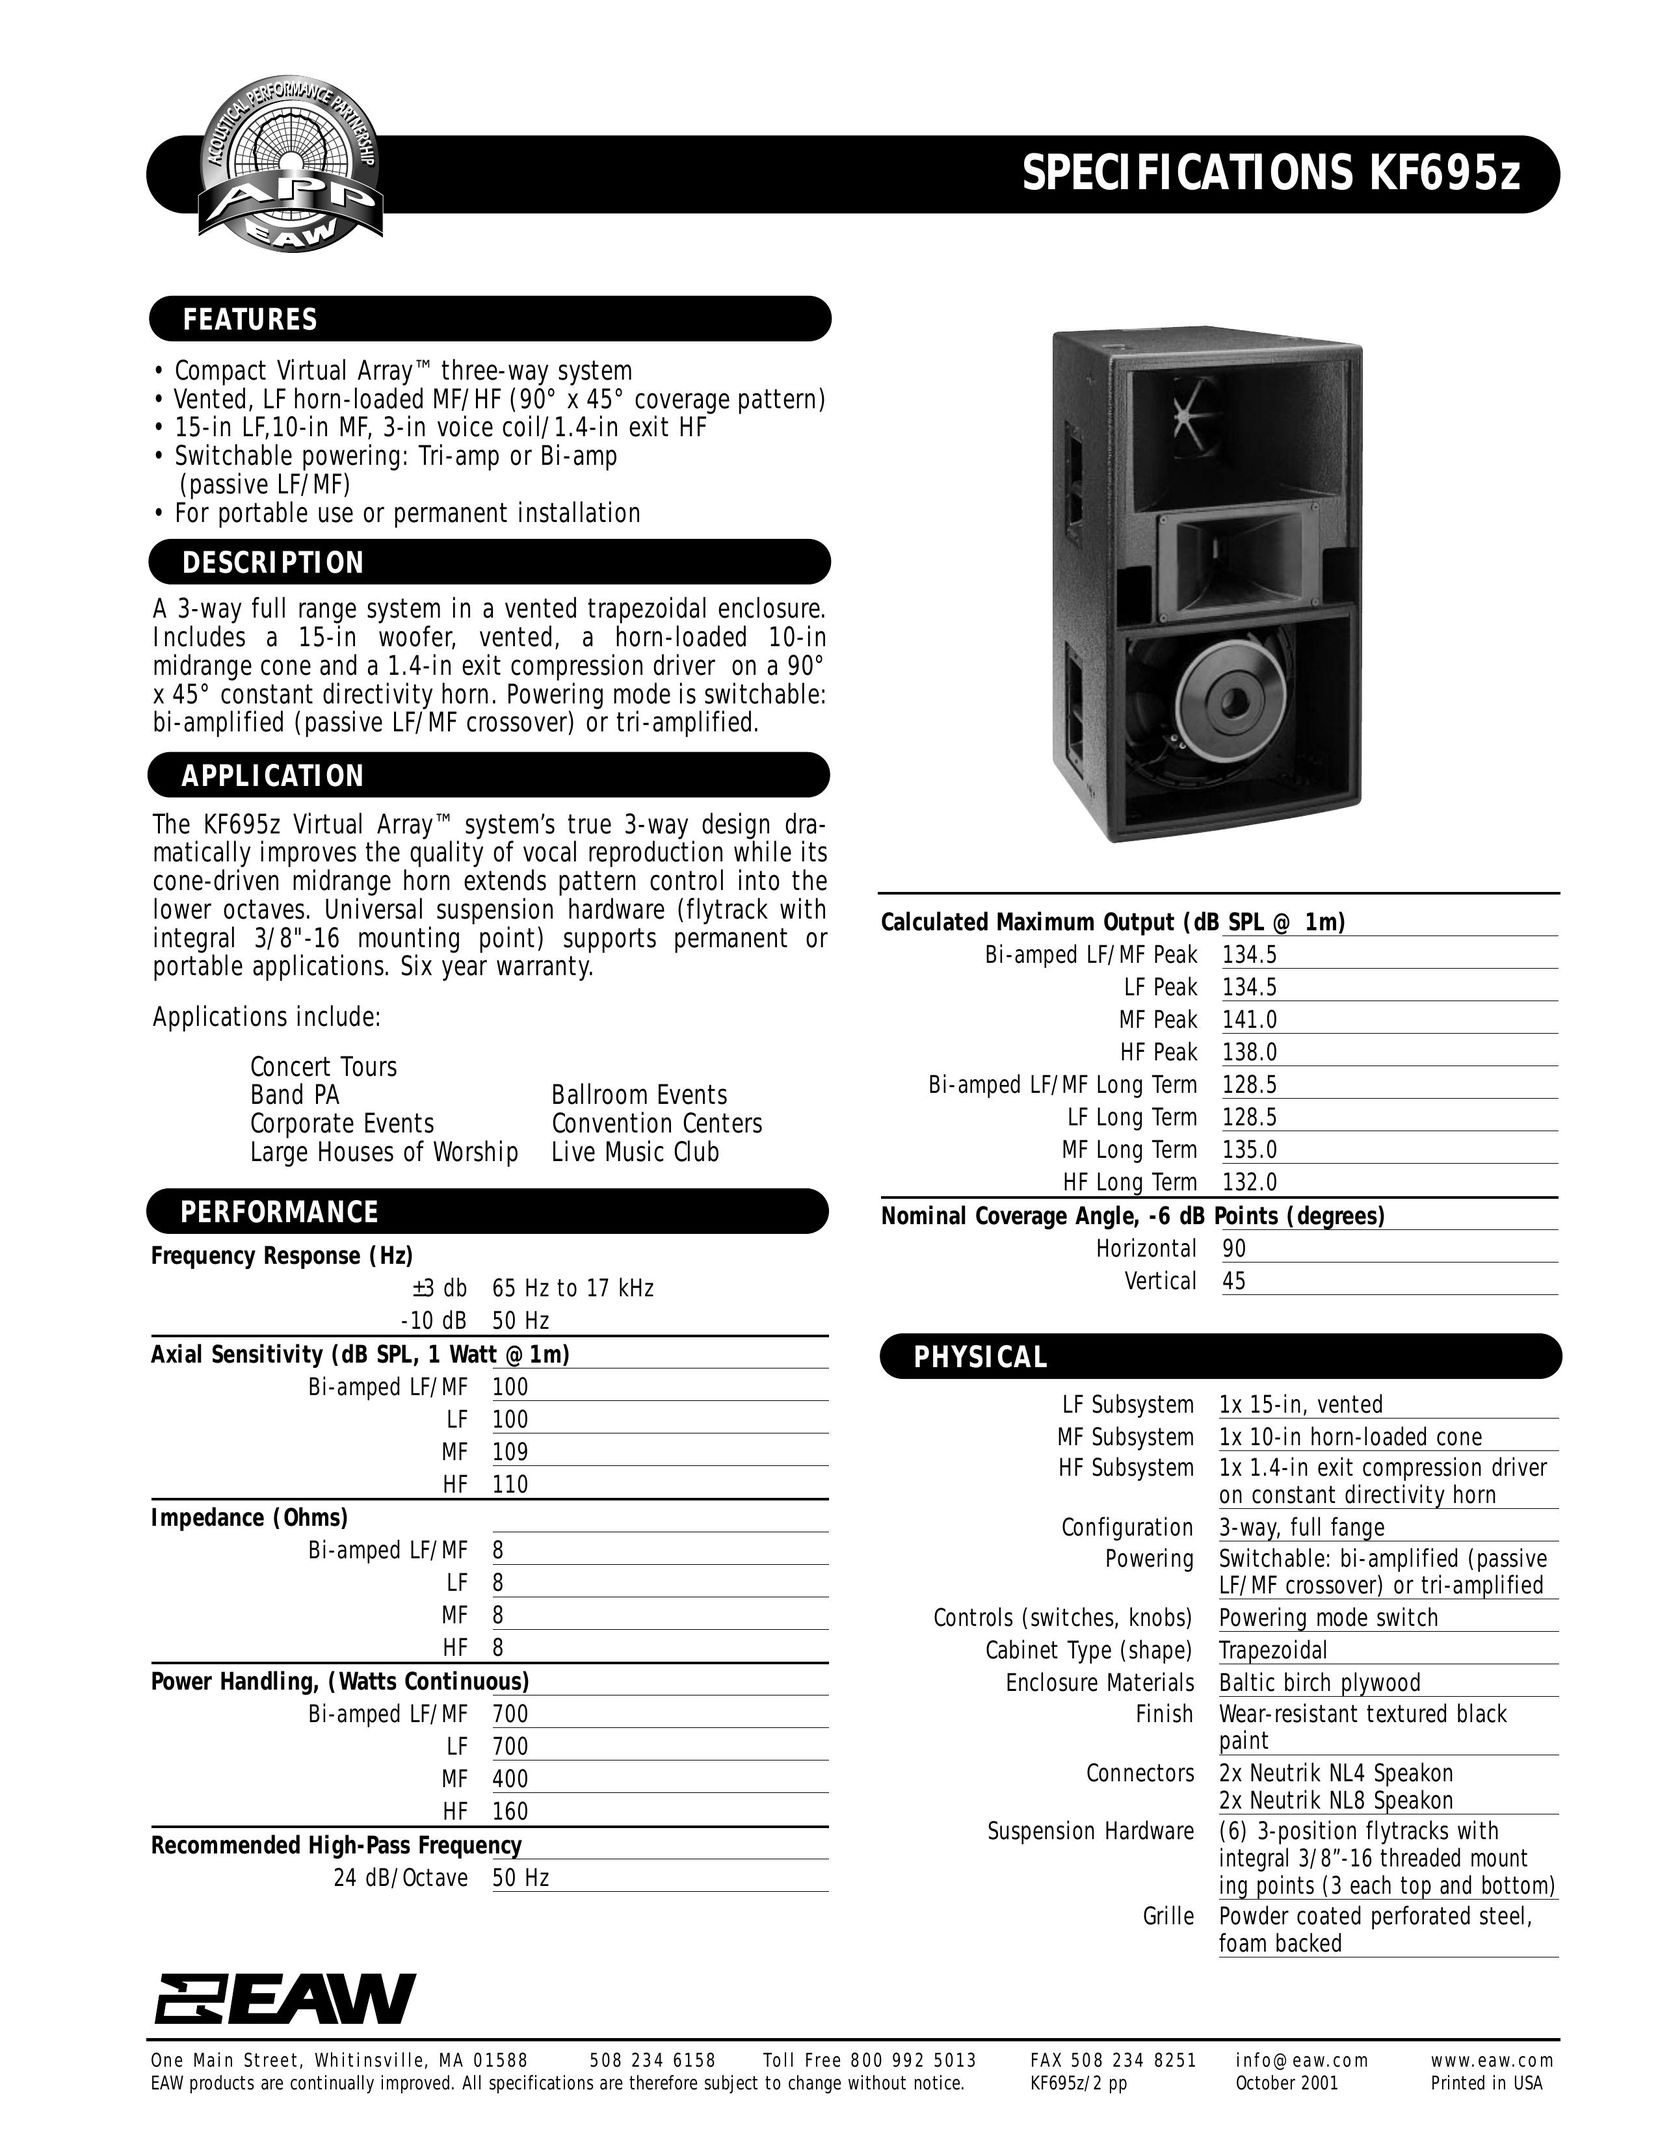 EAW KF695z Portable Speaker User Manual